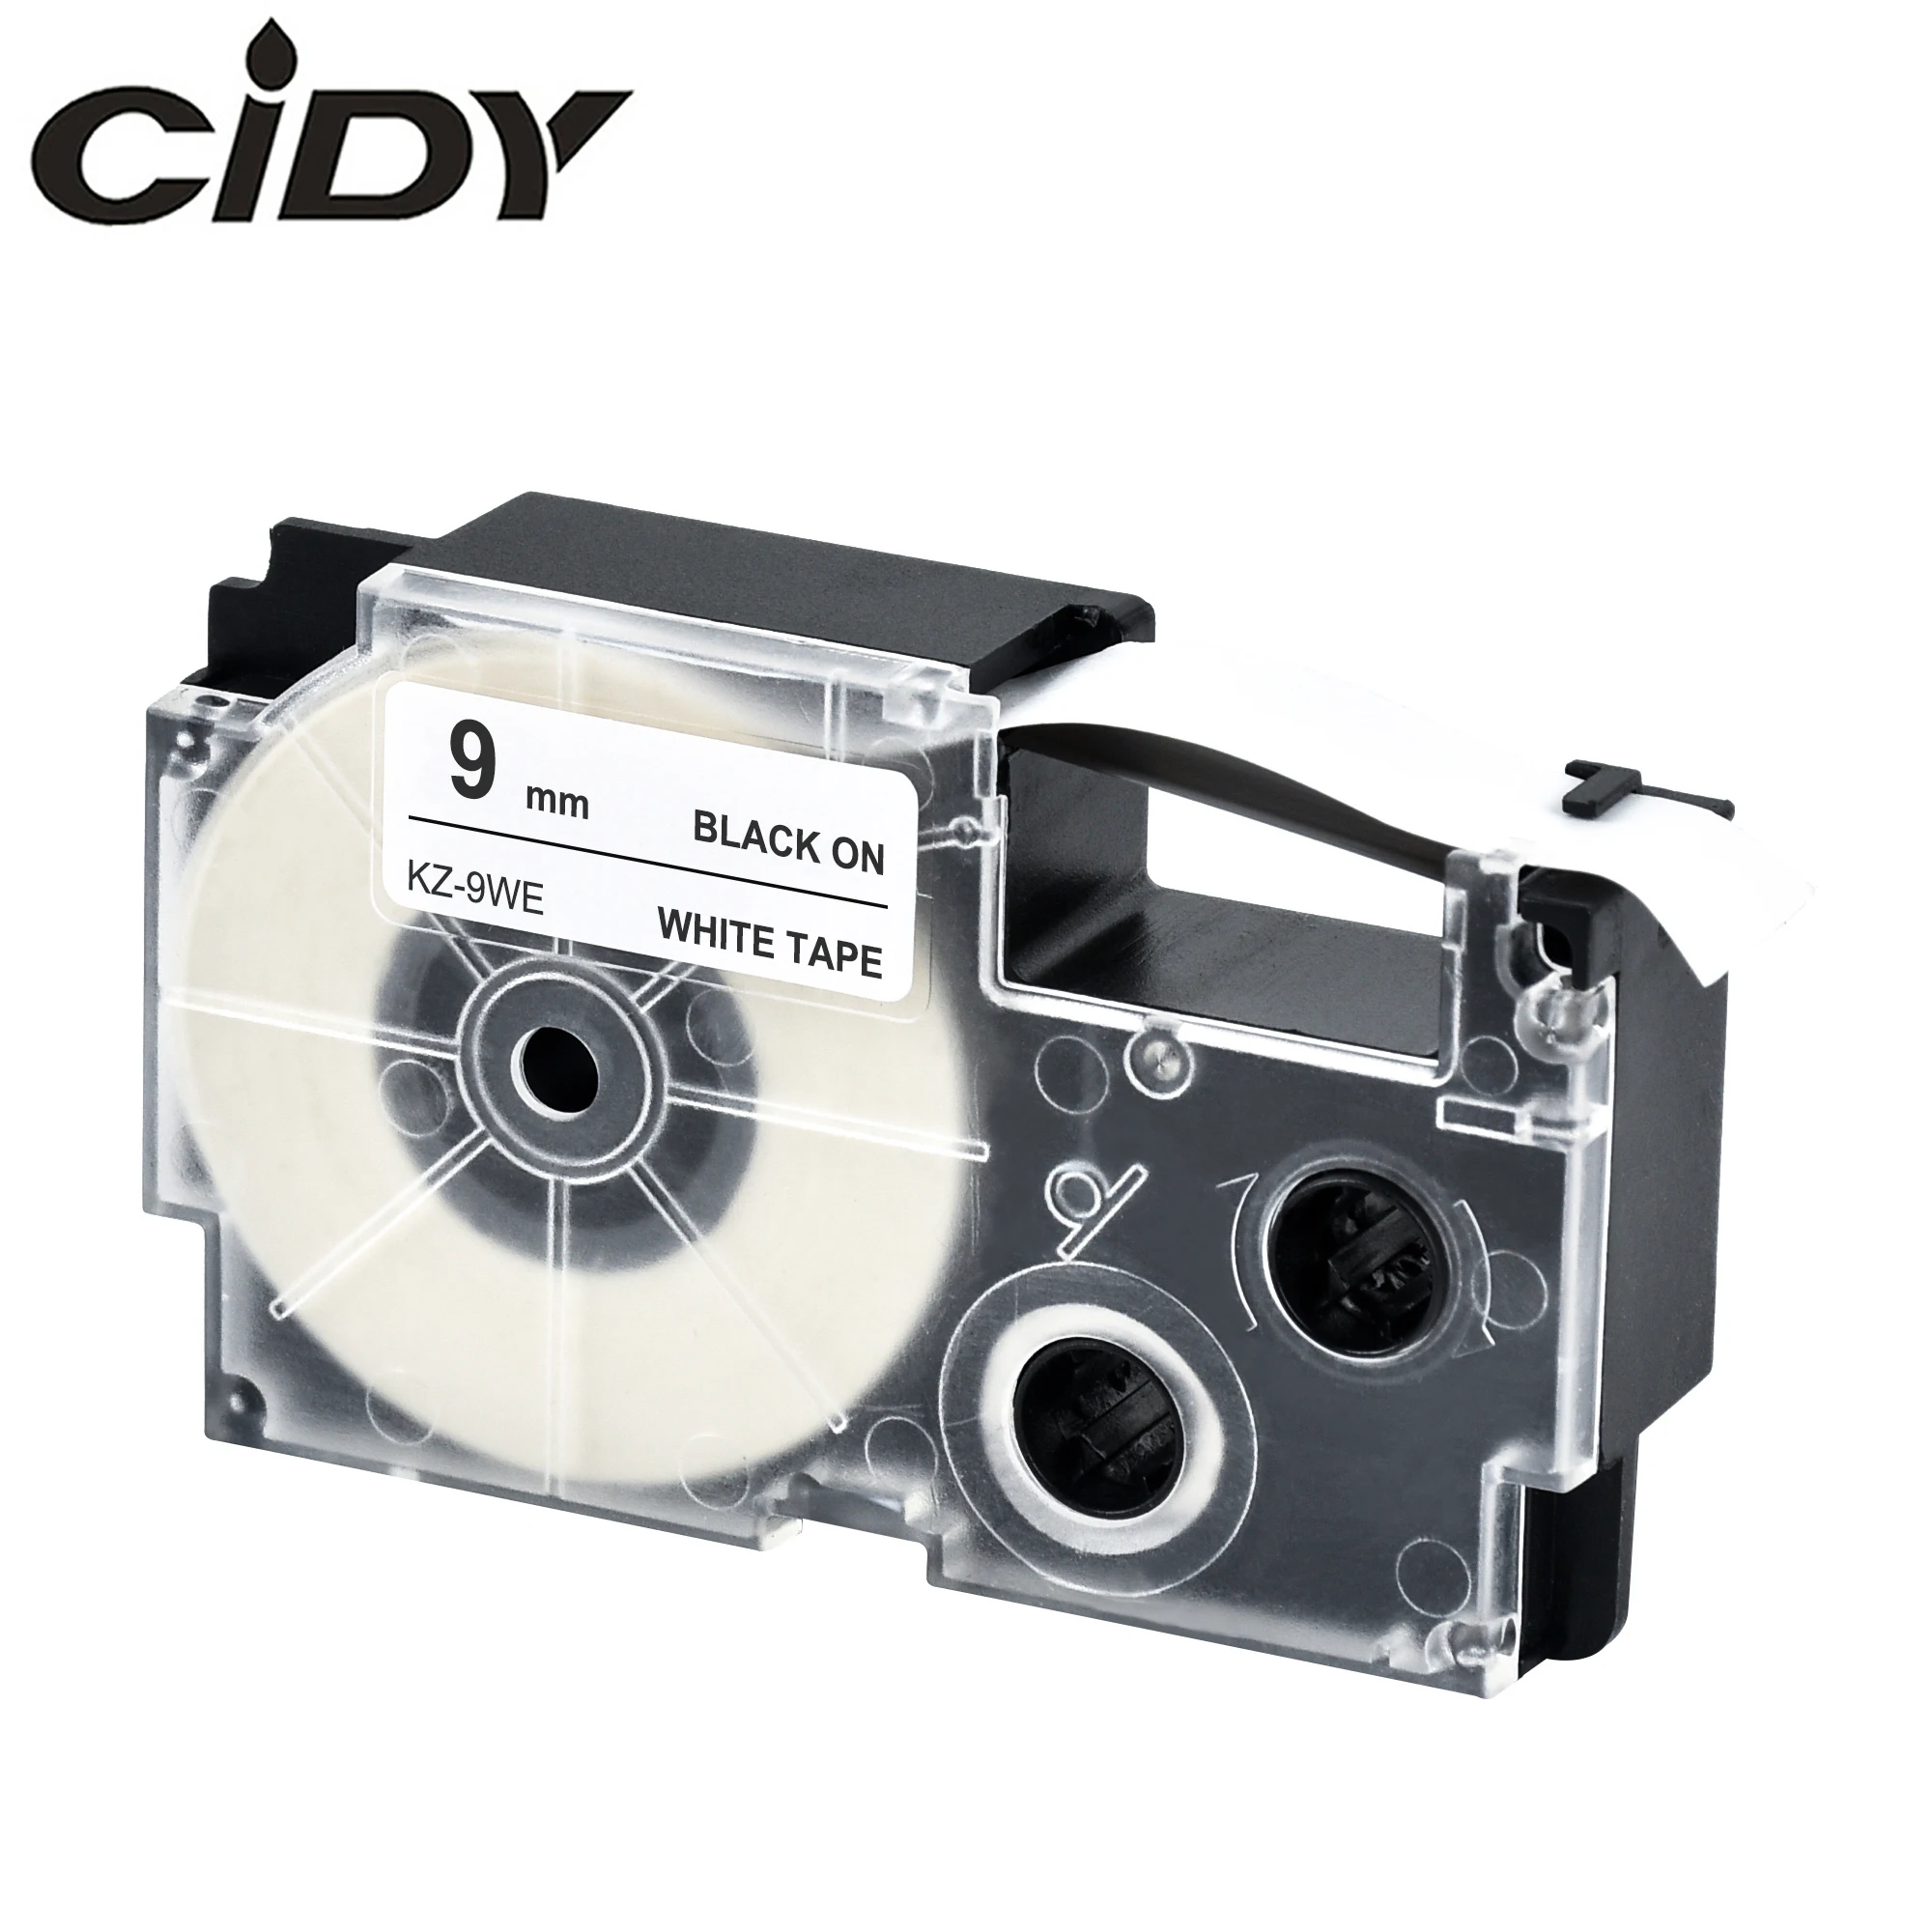 

CIDY 50pcs XR9WE Compatible Casio Label Tape for XR-9WE XR 9WE 9mm Black on White Ribbon Catridge for EZ Printers KL-60-L KL-120